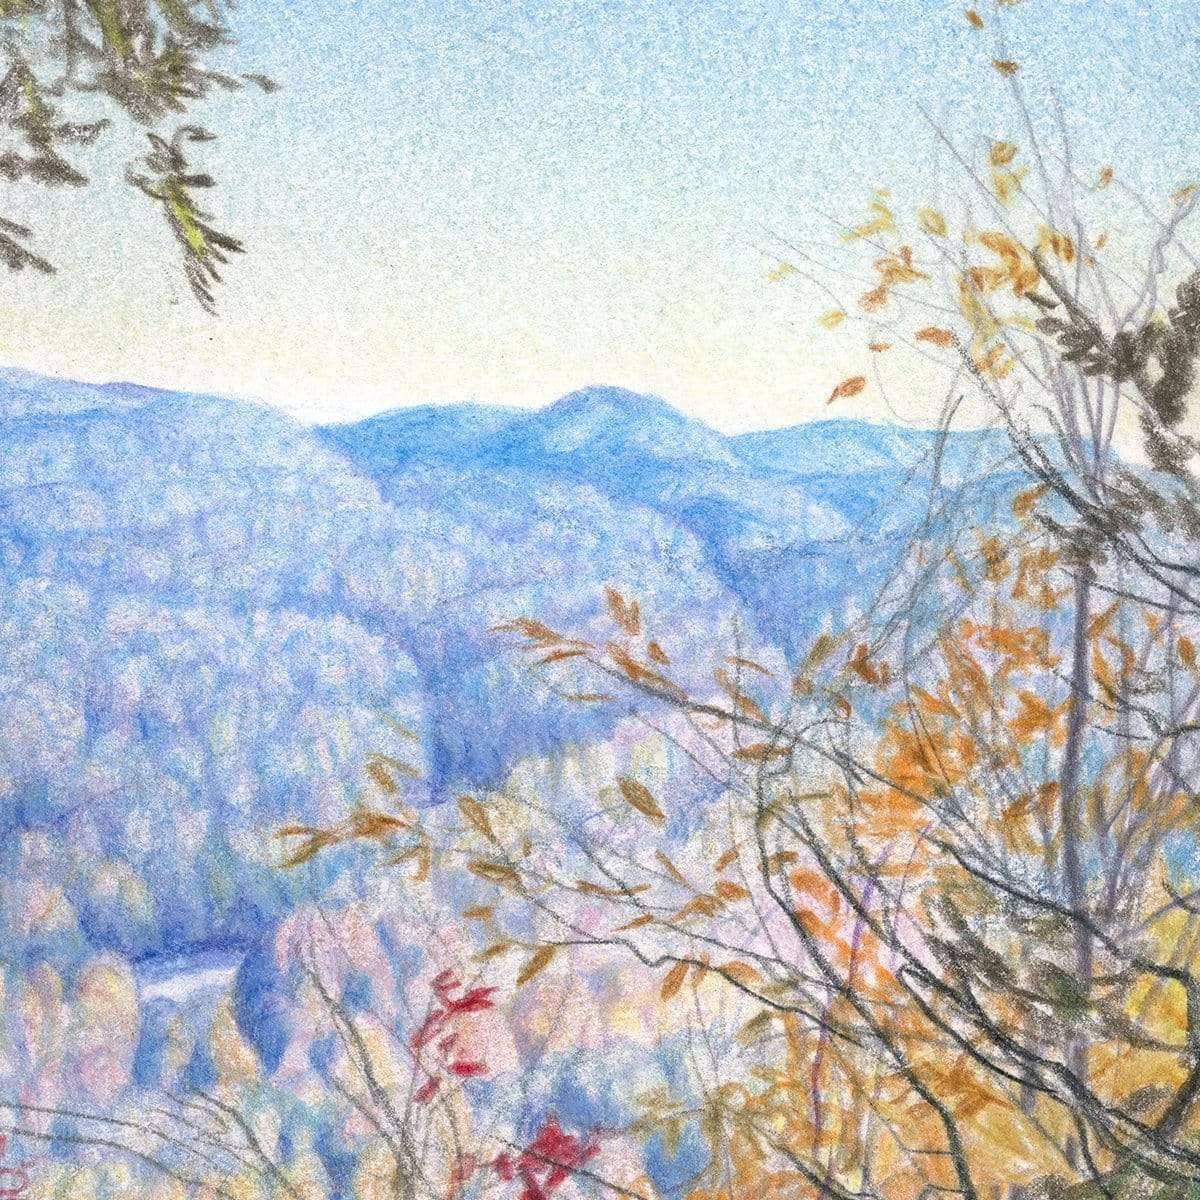 Hockley Valley Rock - Canvas Print | Artwork by Glen Loates